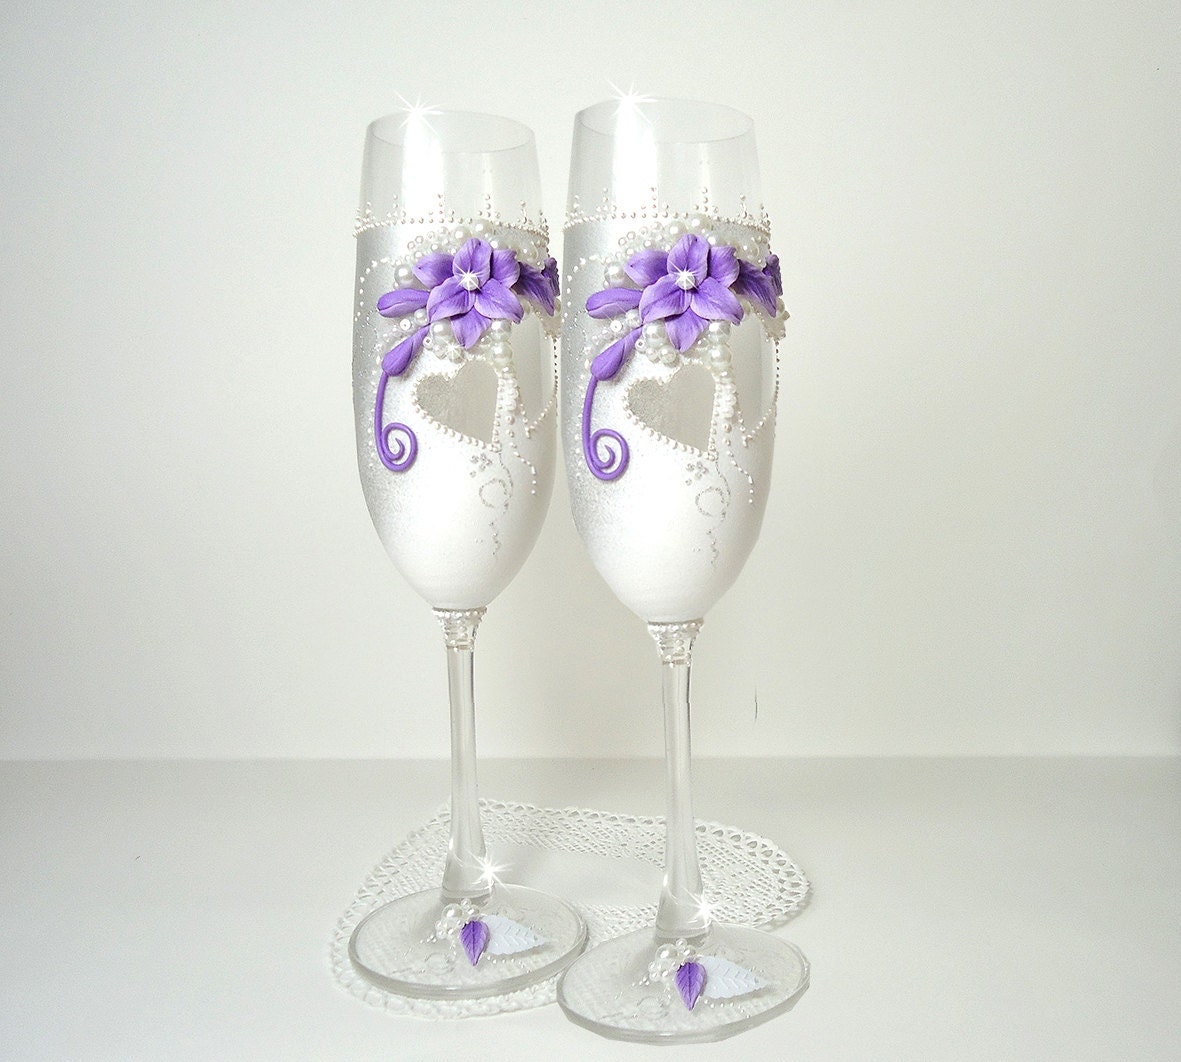 Wedding champagne glasses Toasting flutes Favor gift